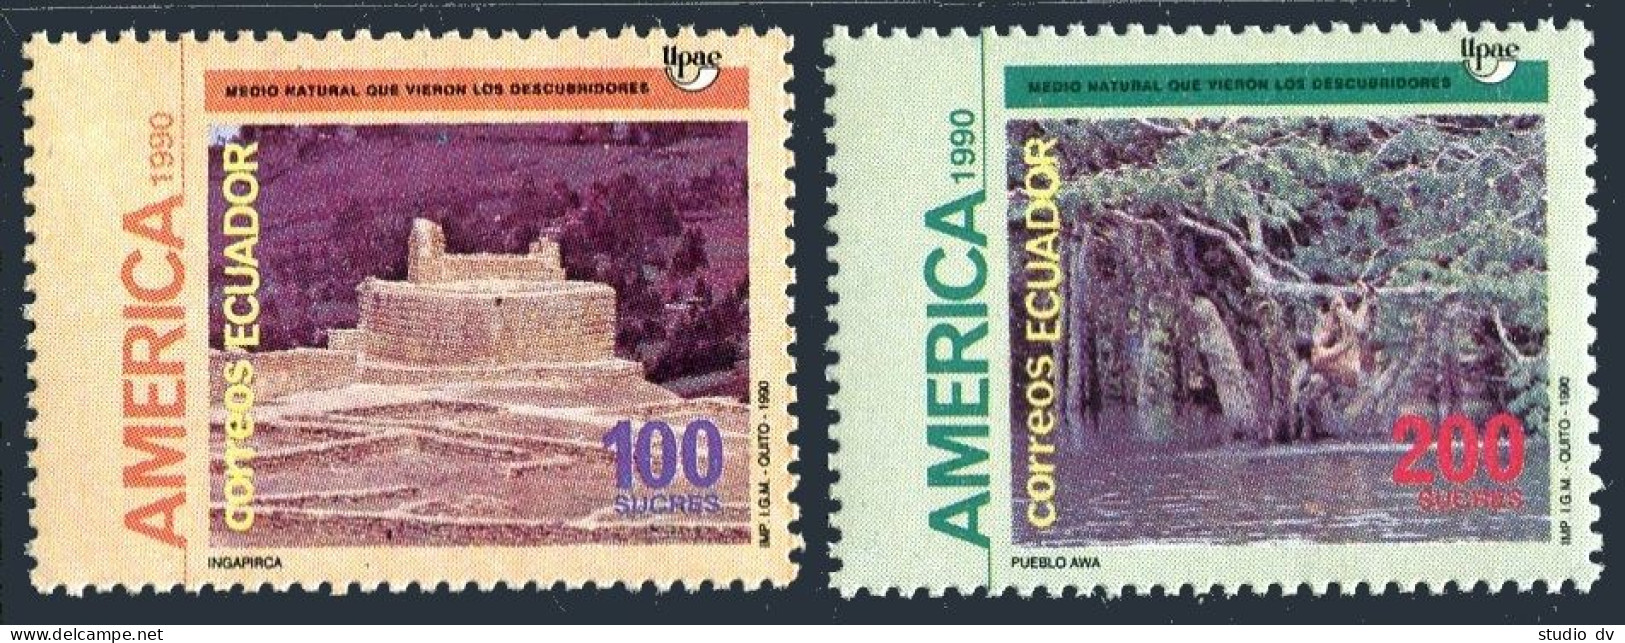 Ecuador 1258-1259, MNH. Discovery Of America, 500th Ann. 1990. Dwelling, Swamp. - Ecuador